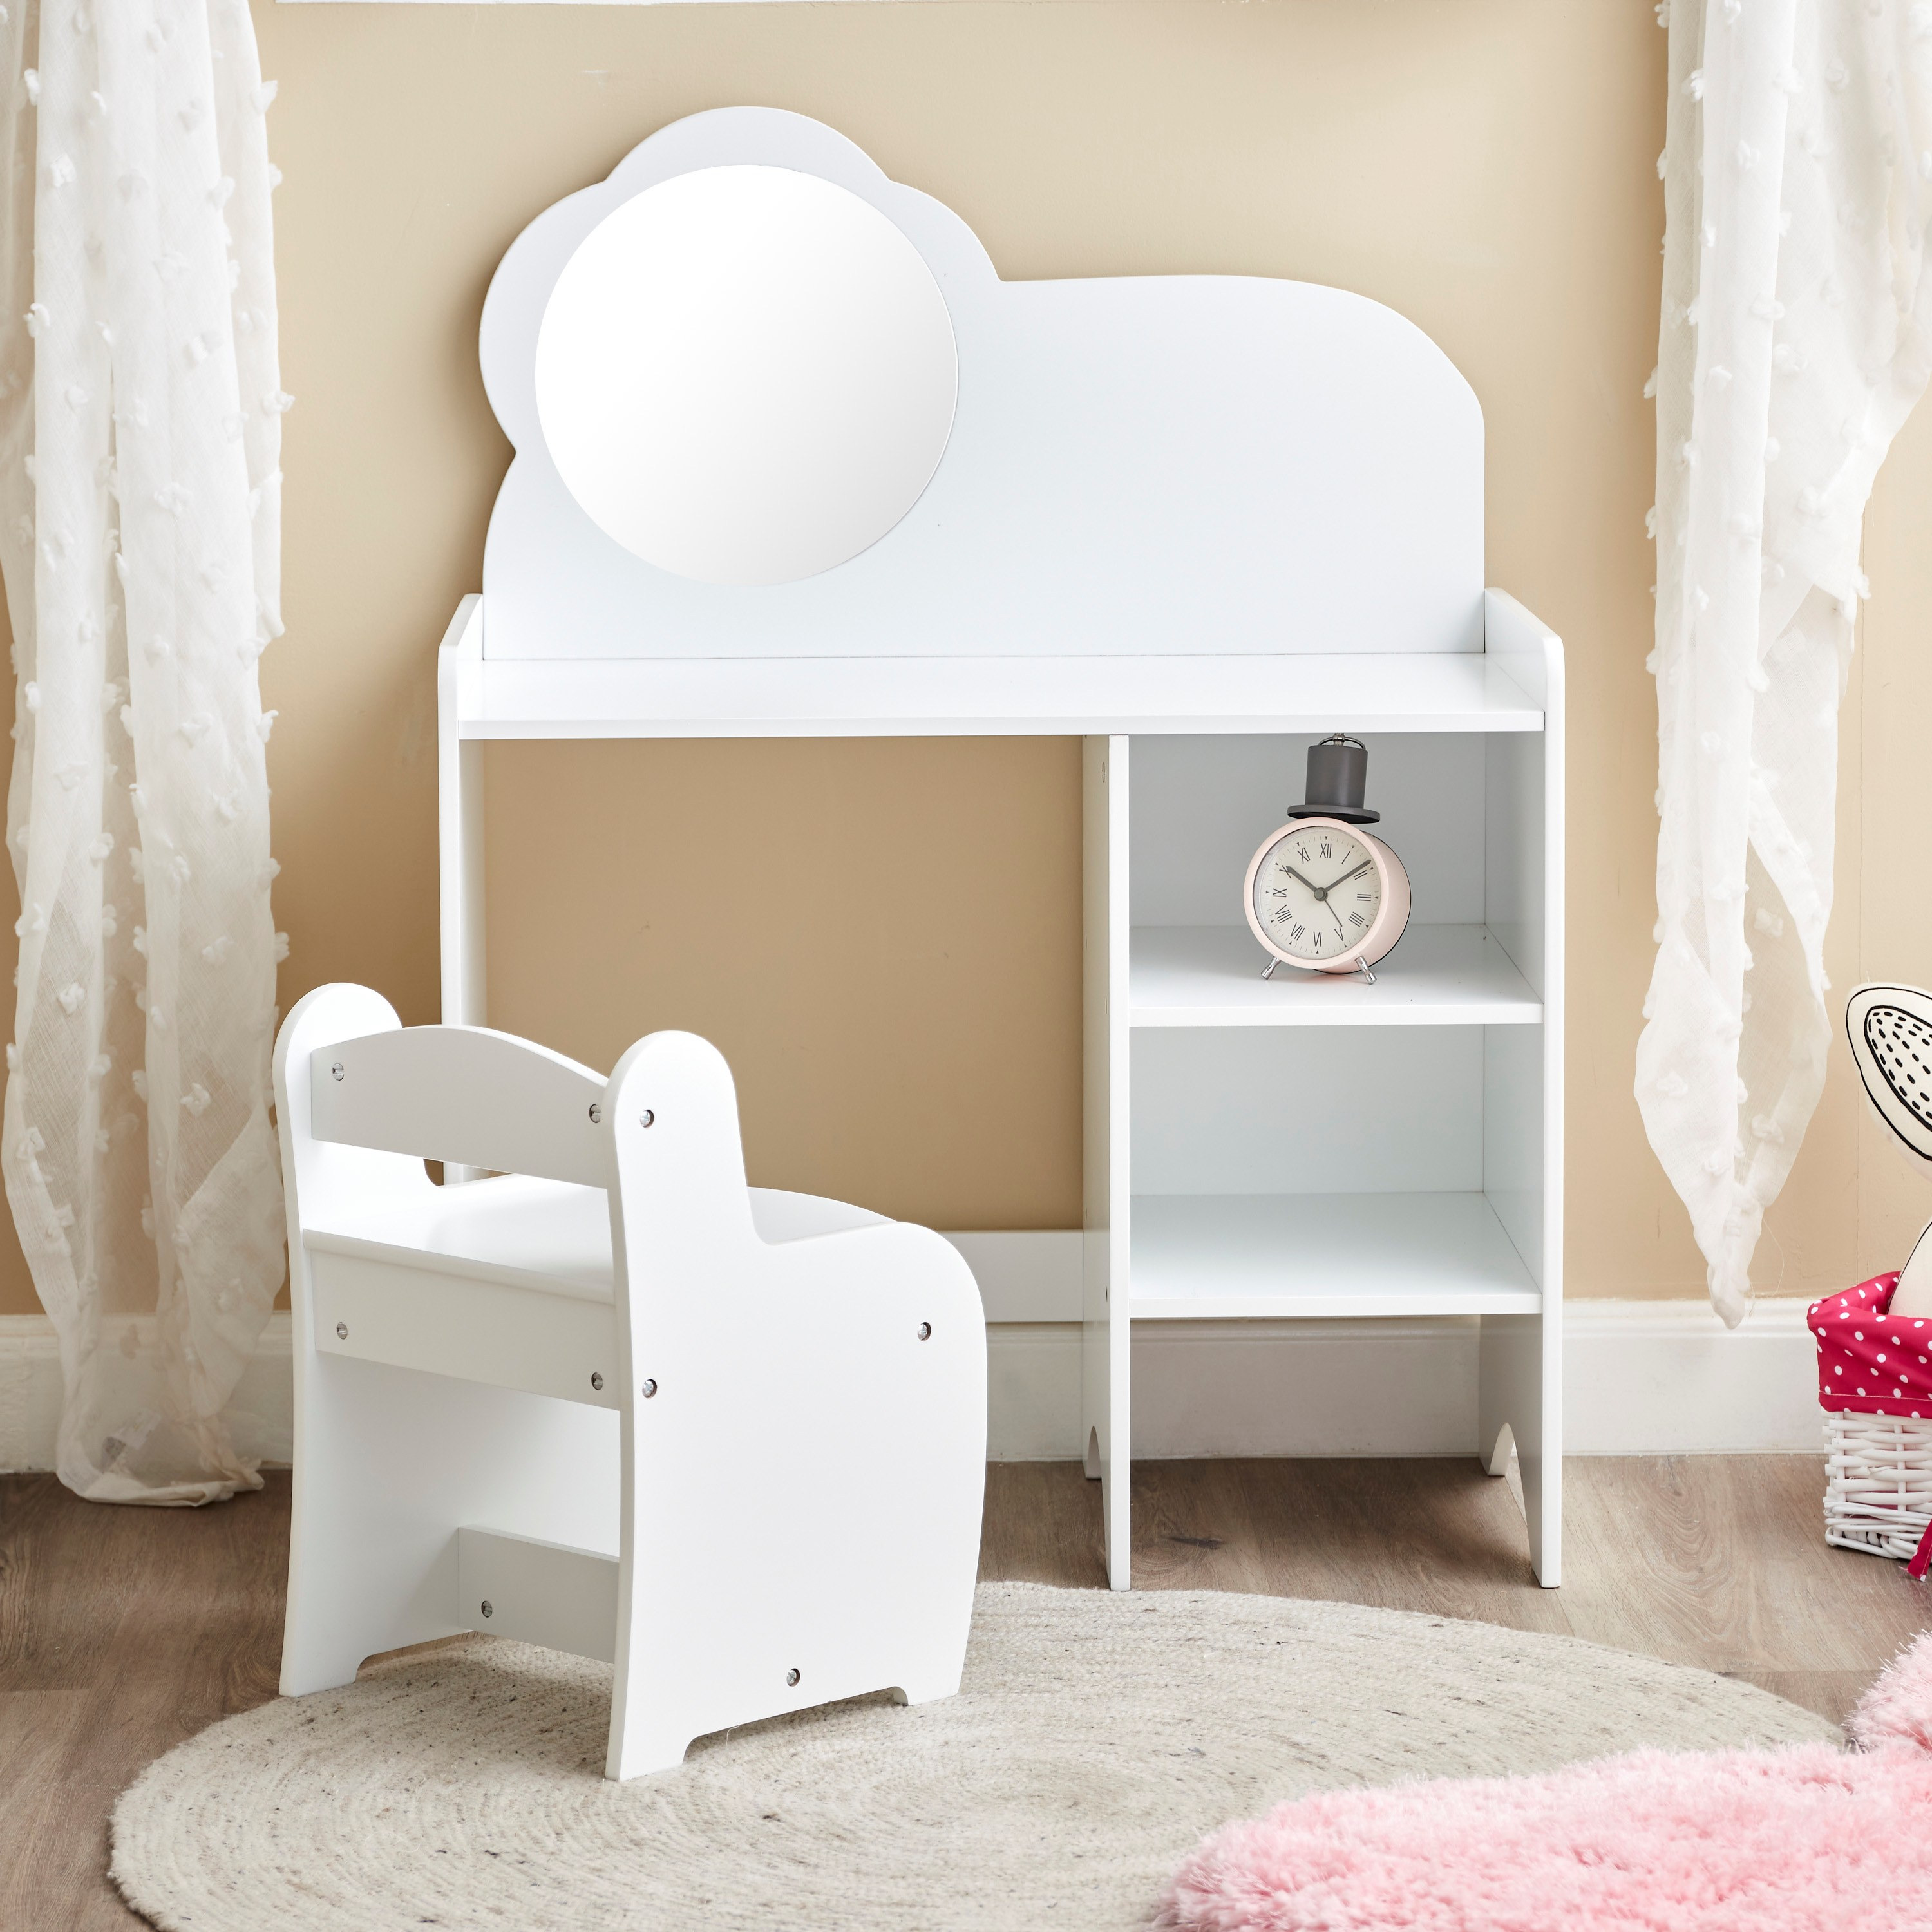 Home Centre Elsa Dresser Mirror with Drawer - Brown : Amazon.in: Home &  Kitchen